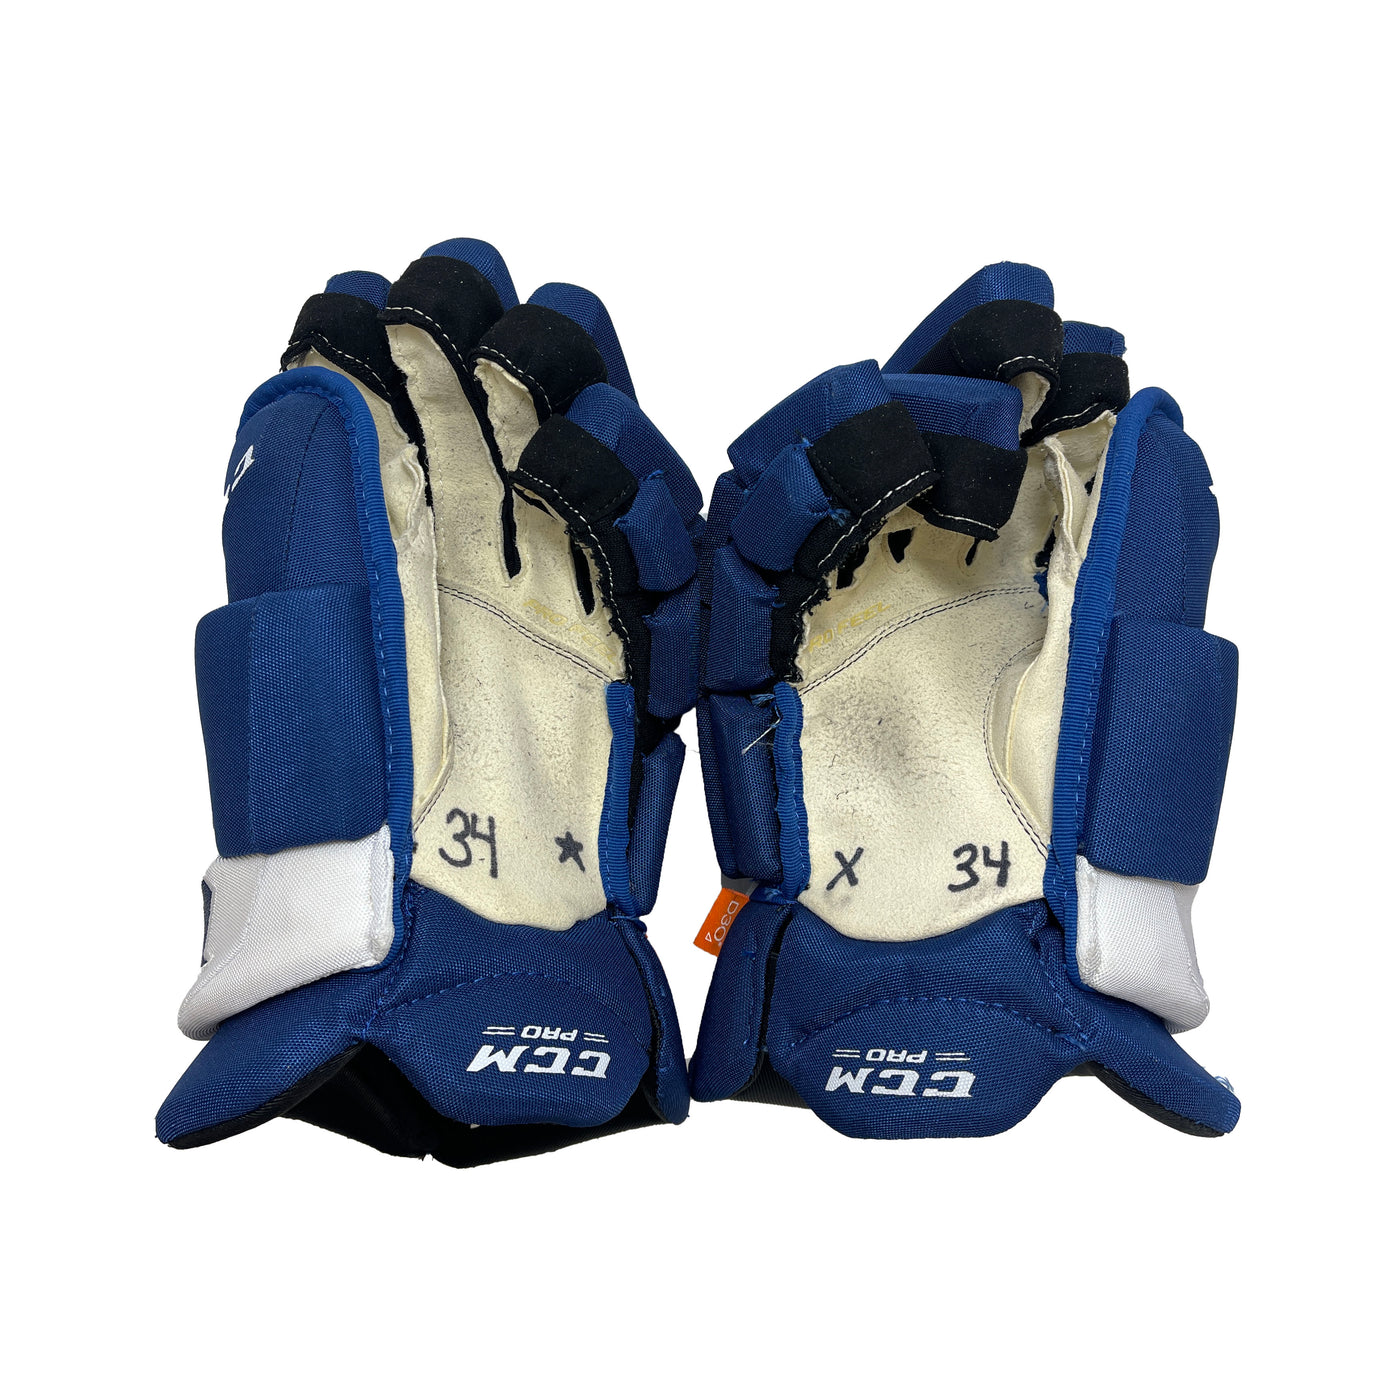 CCM FT1 Toronto Maple Leafs Pro Stock Gloves Game Used - Auston Matthews